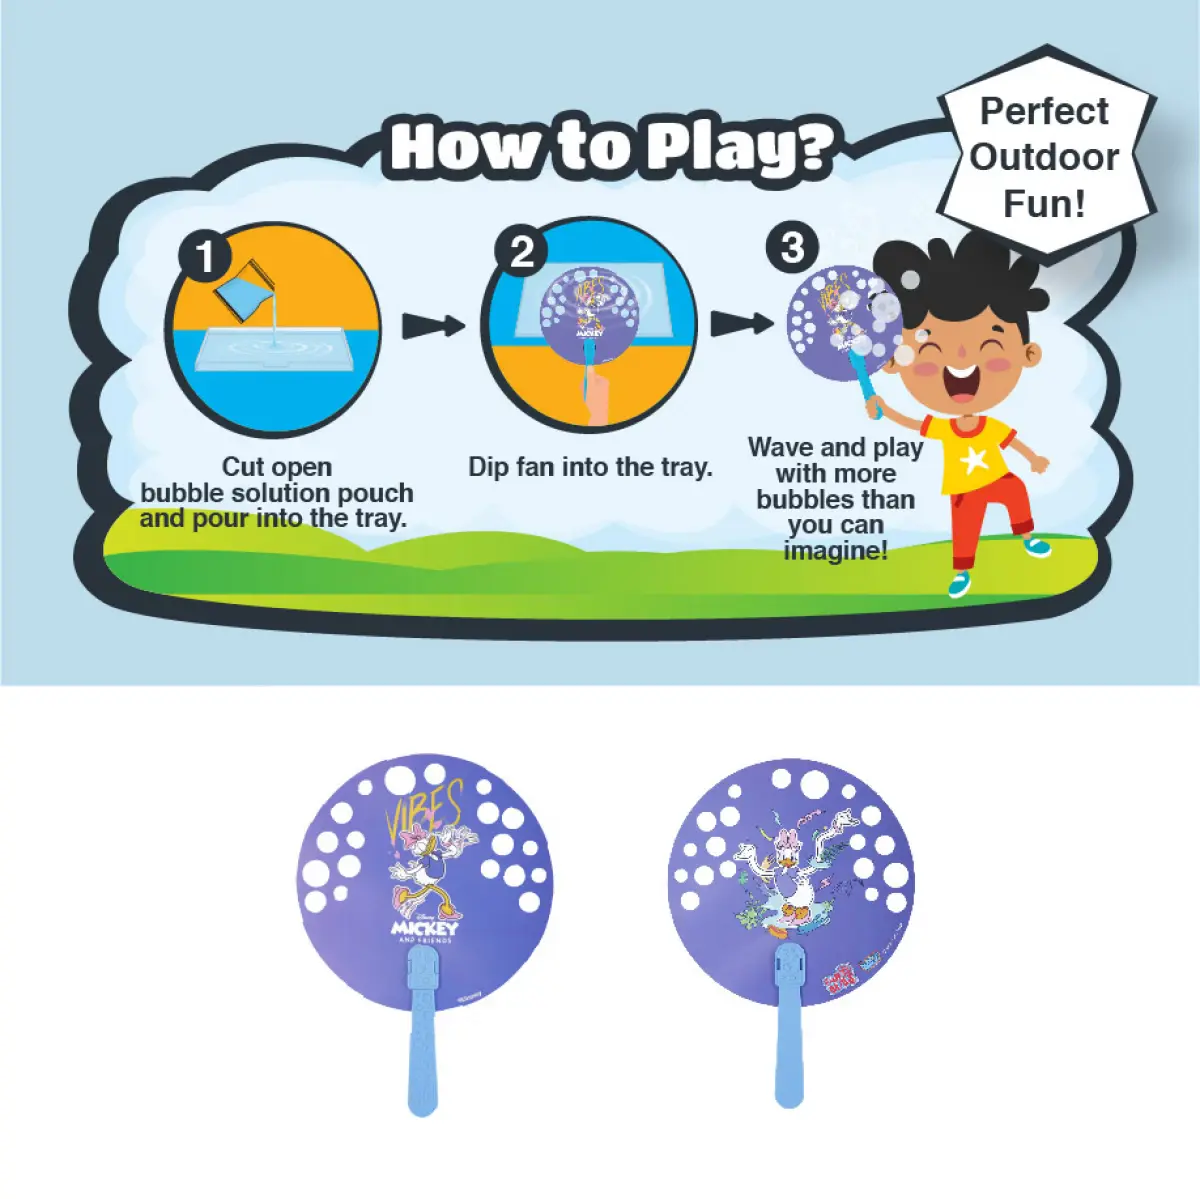 Bubble Magic Fan Bubs Daisy Duck Bubble Solution For Kids of Age 3Y+, Multicolour